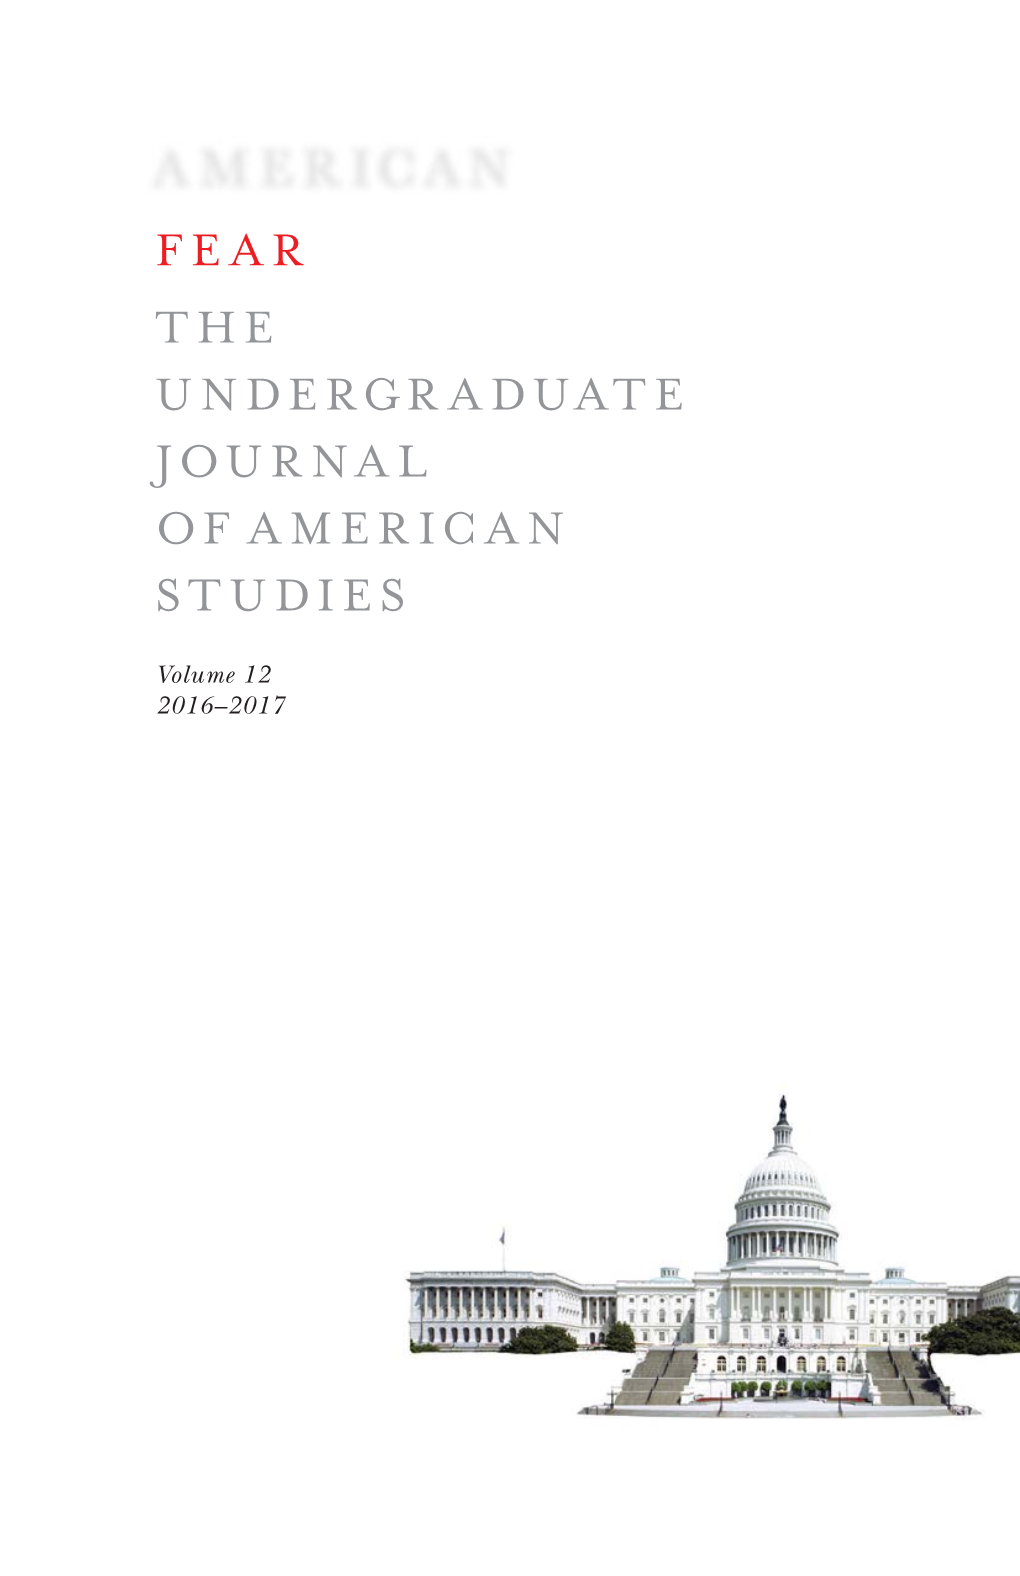 Fear the Undergraduate Journal of American Studies